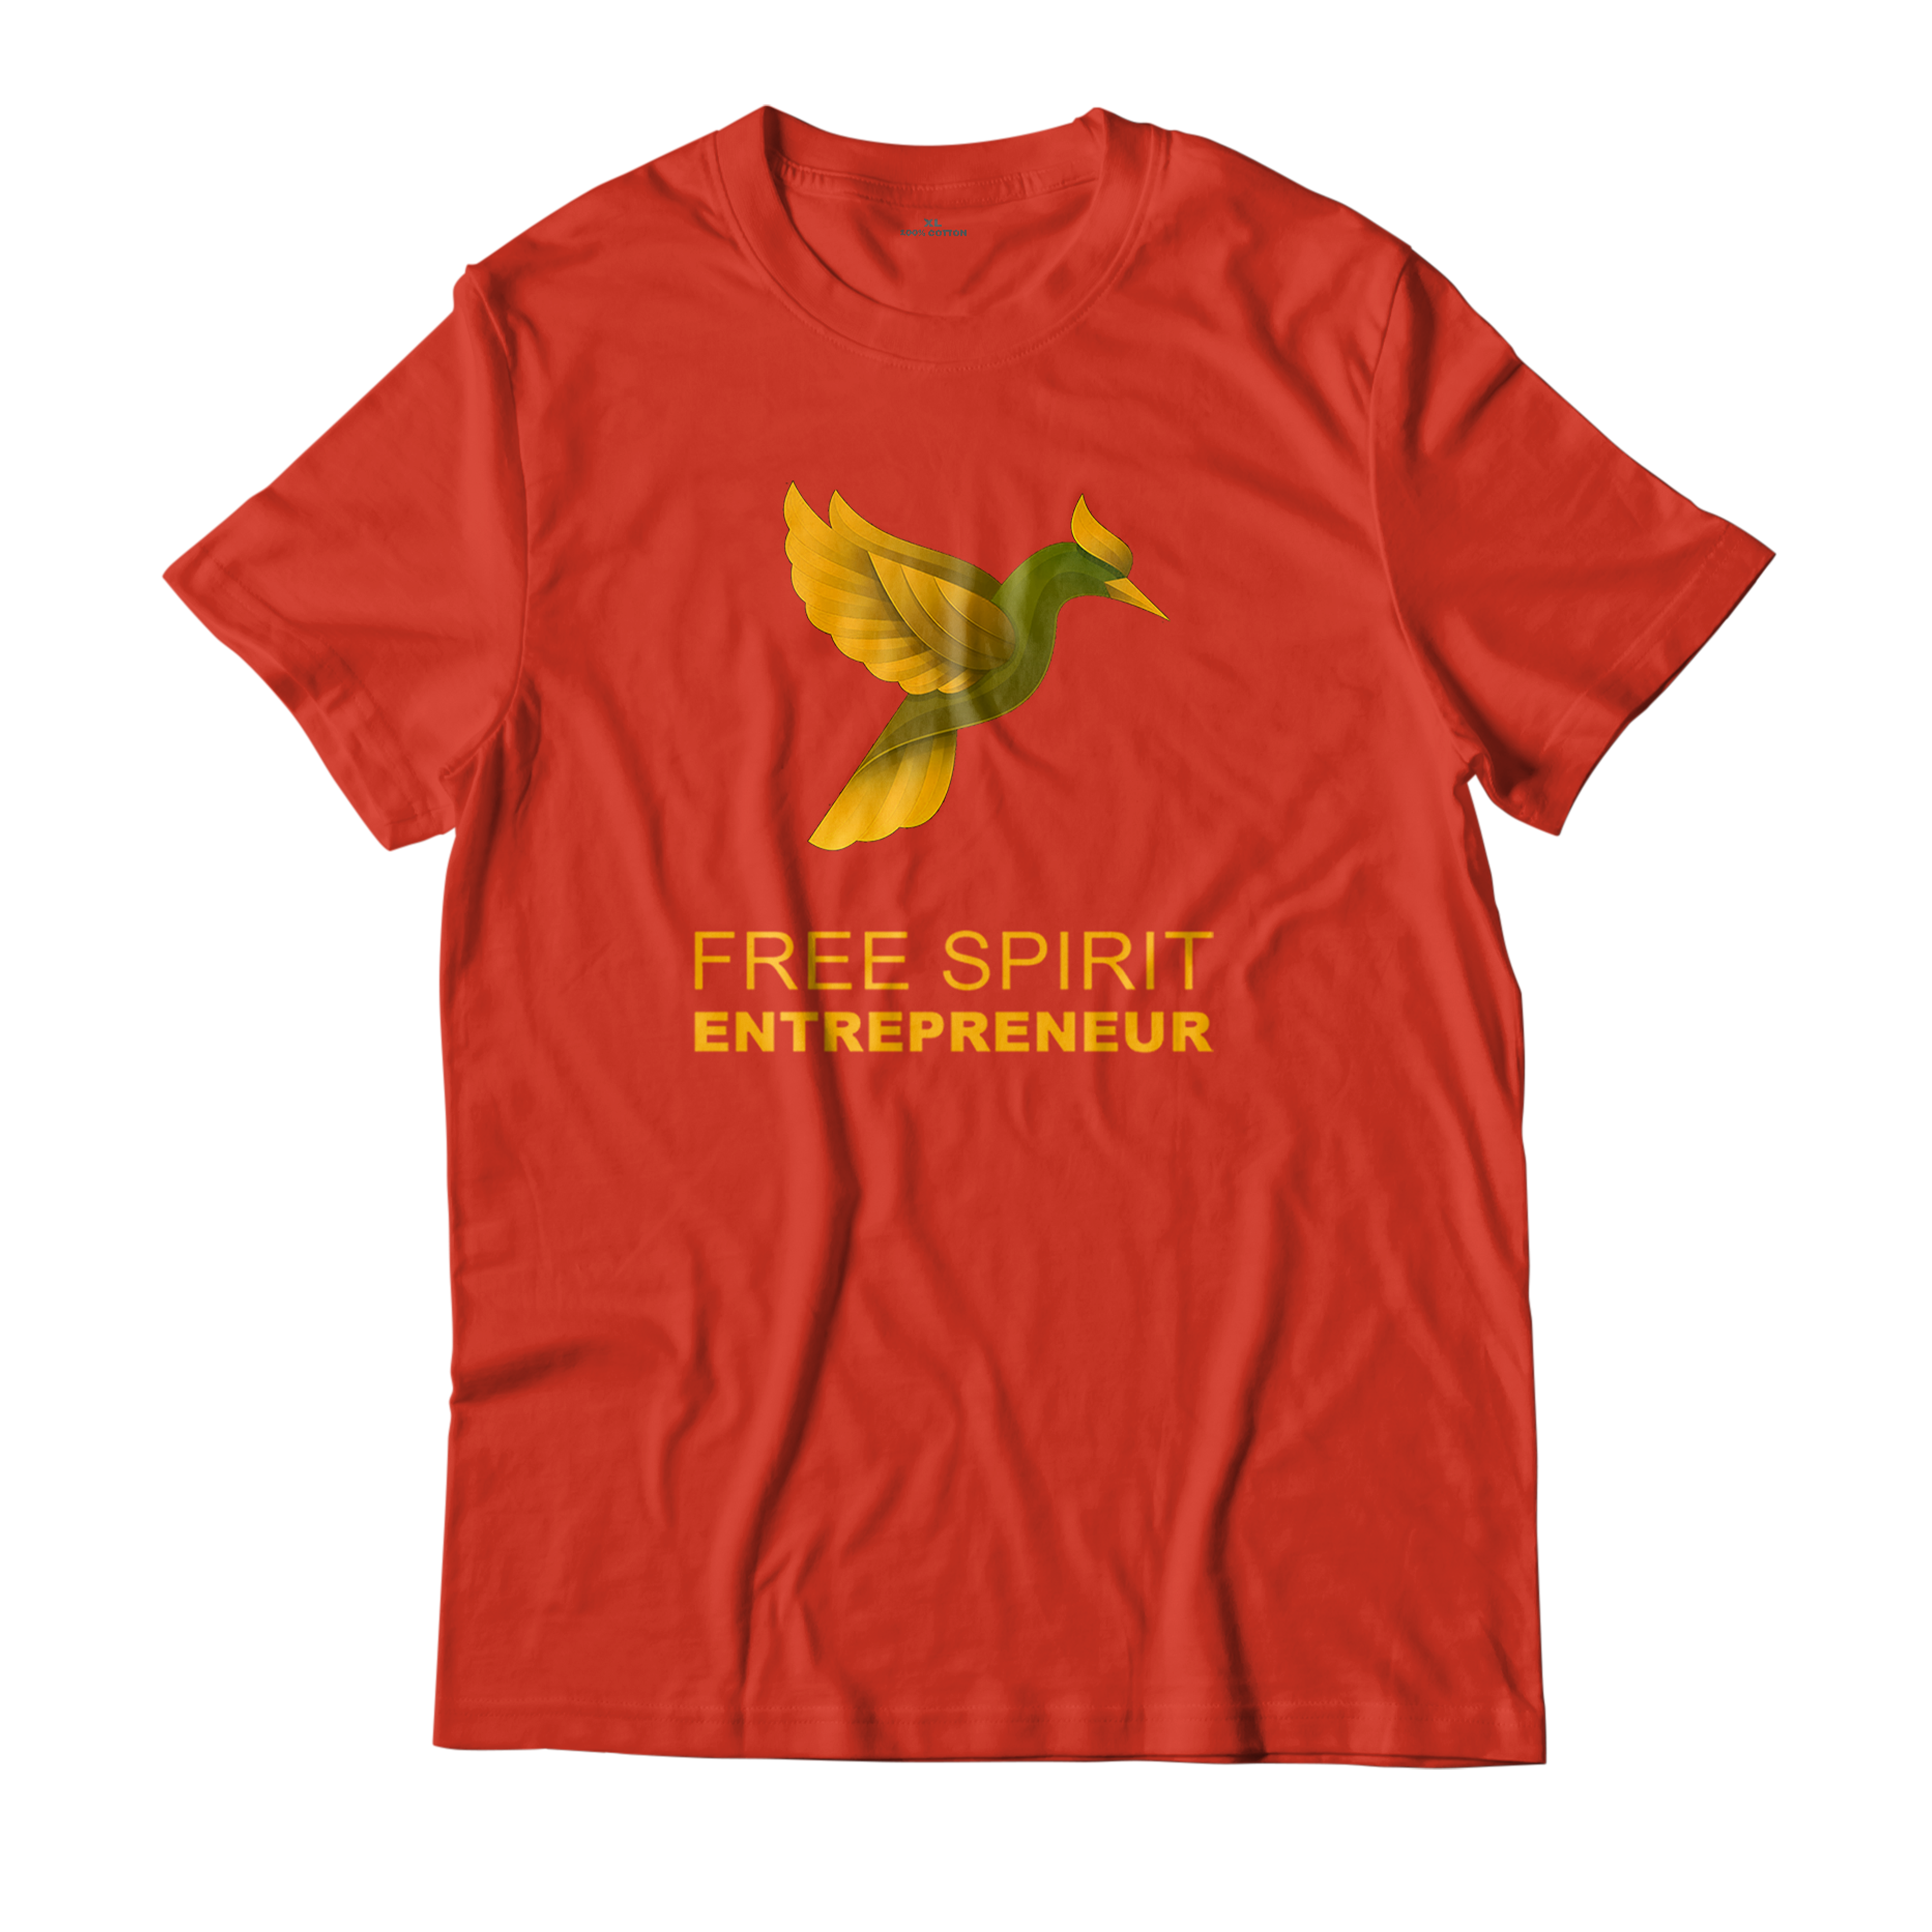 free_spirit_entrepreneur_t_shirt_ top view_red_en